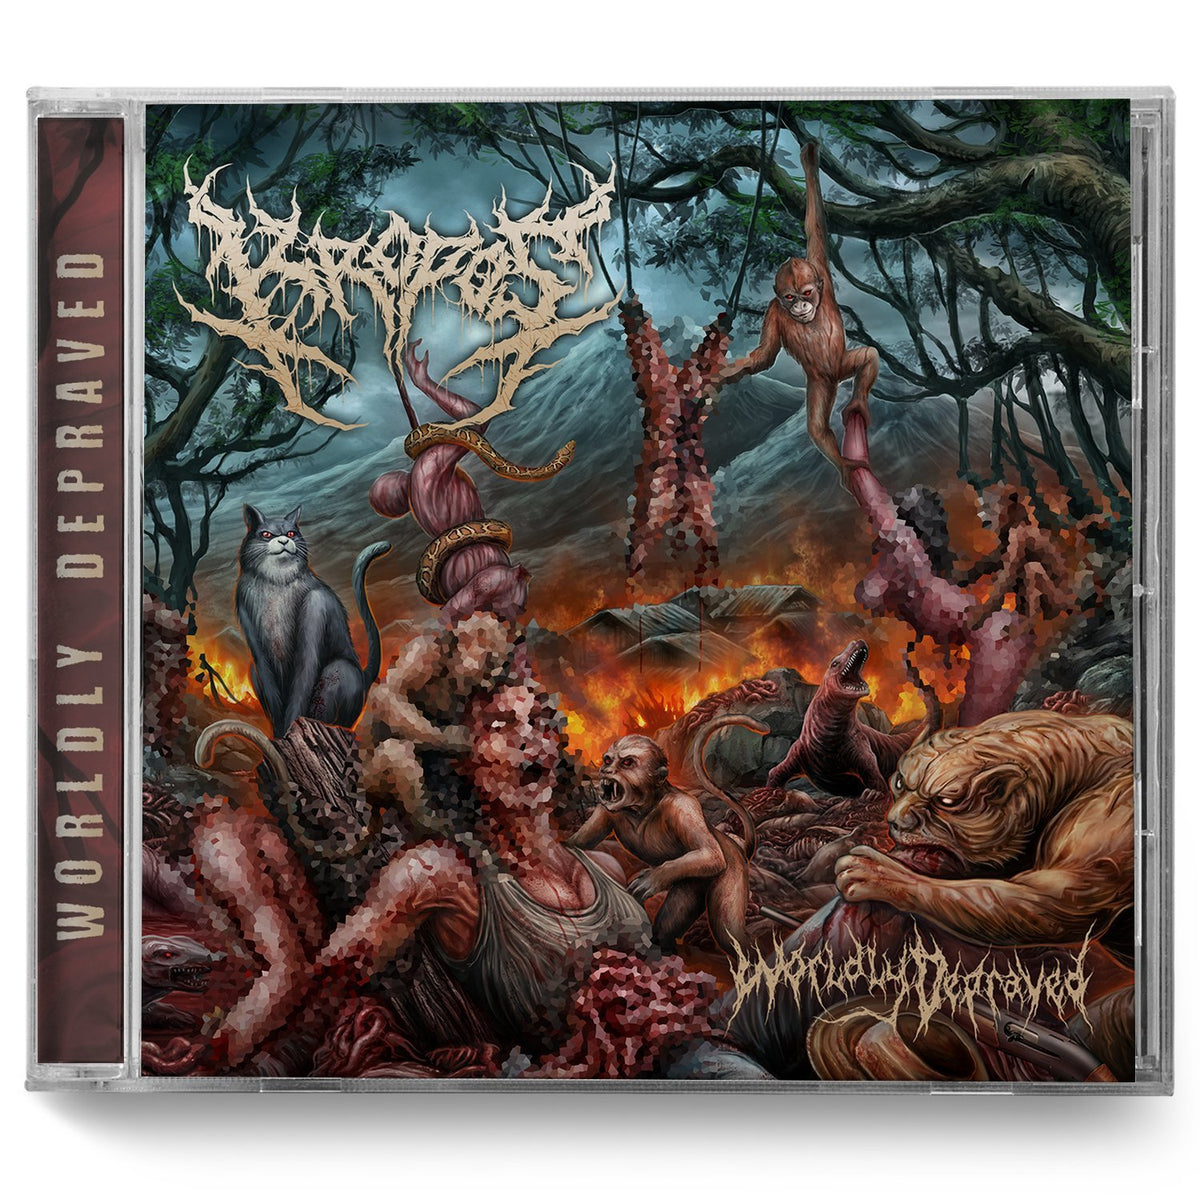 Kropos "Worldly Depraved" CD - Miasma Records